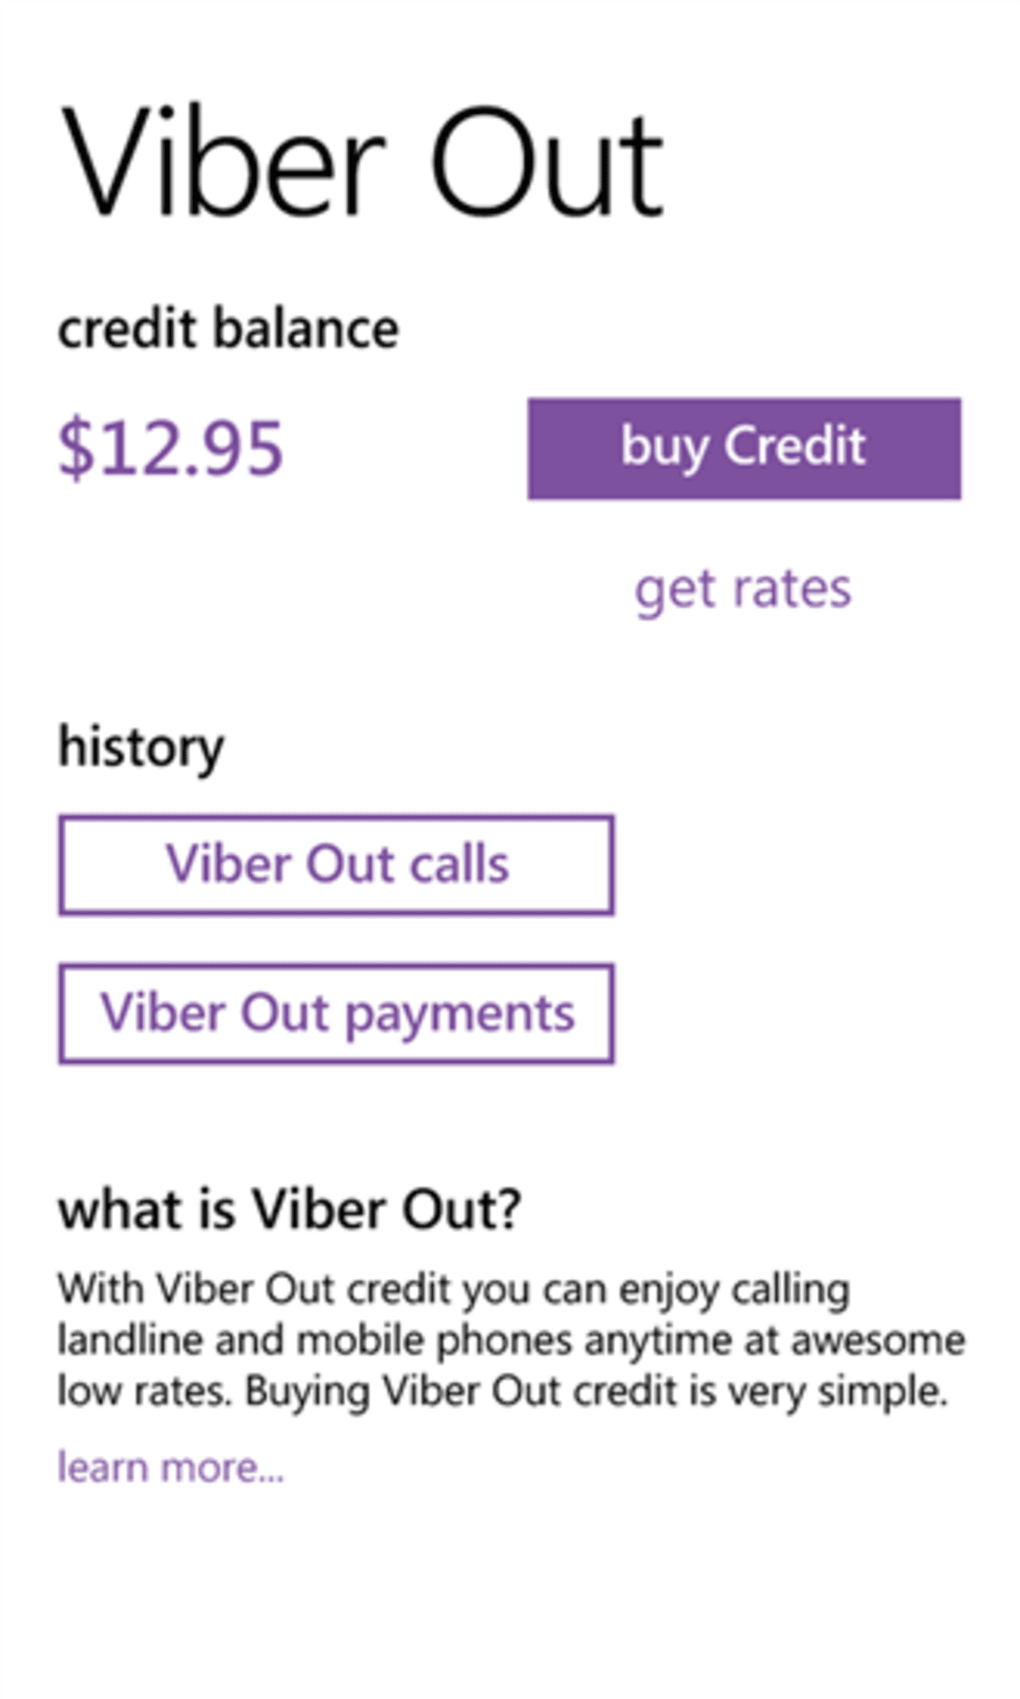 viber download for windows 7 pc